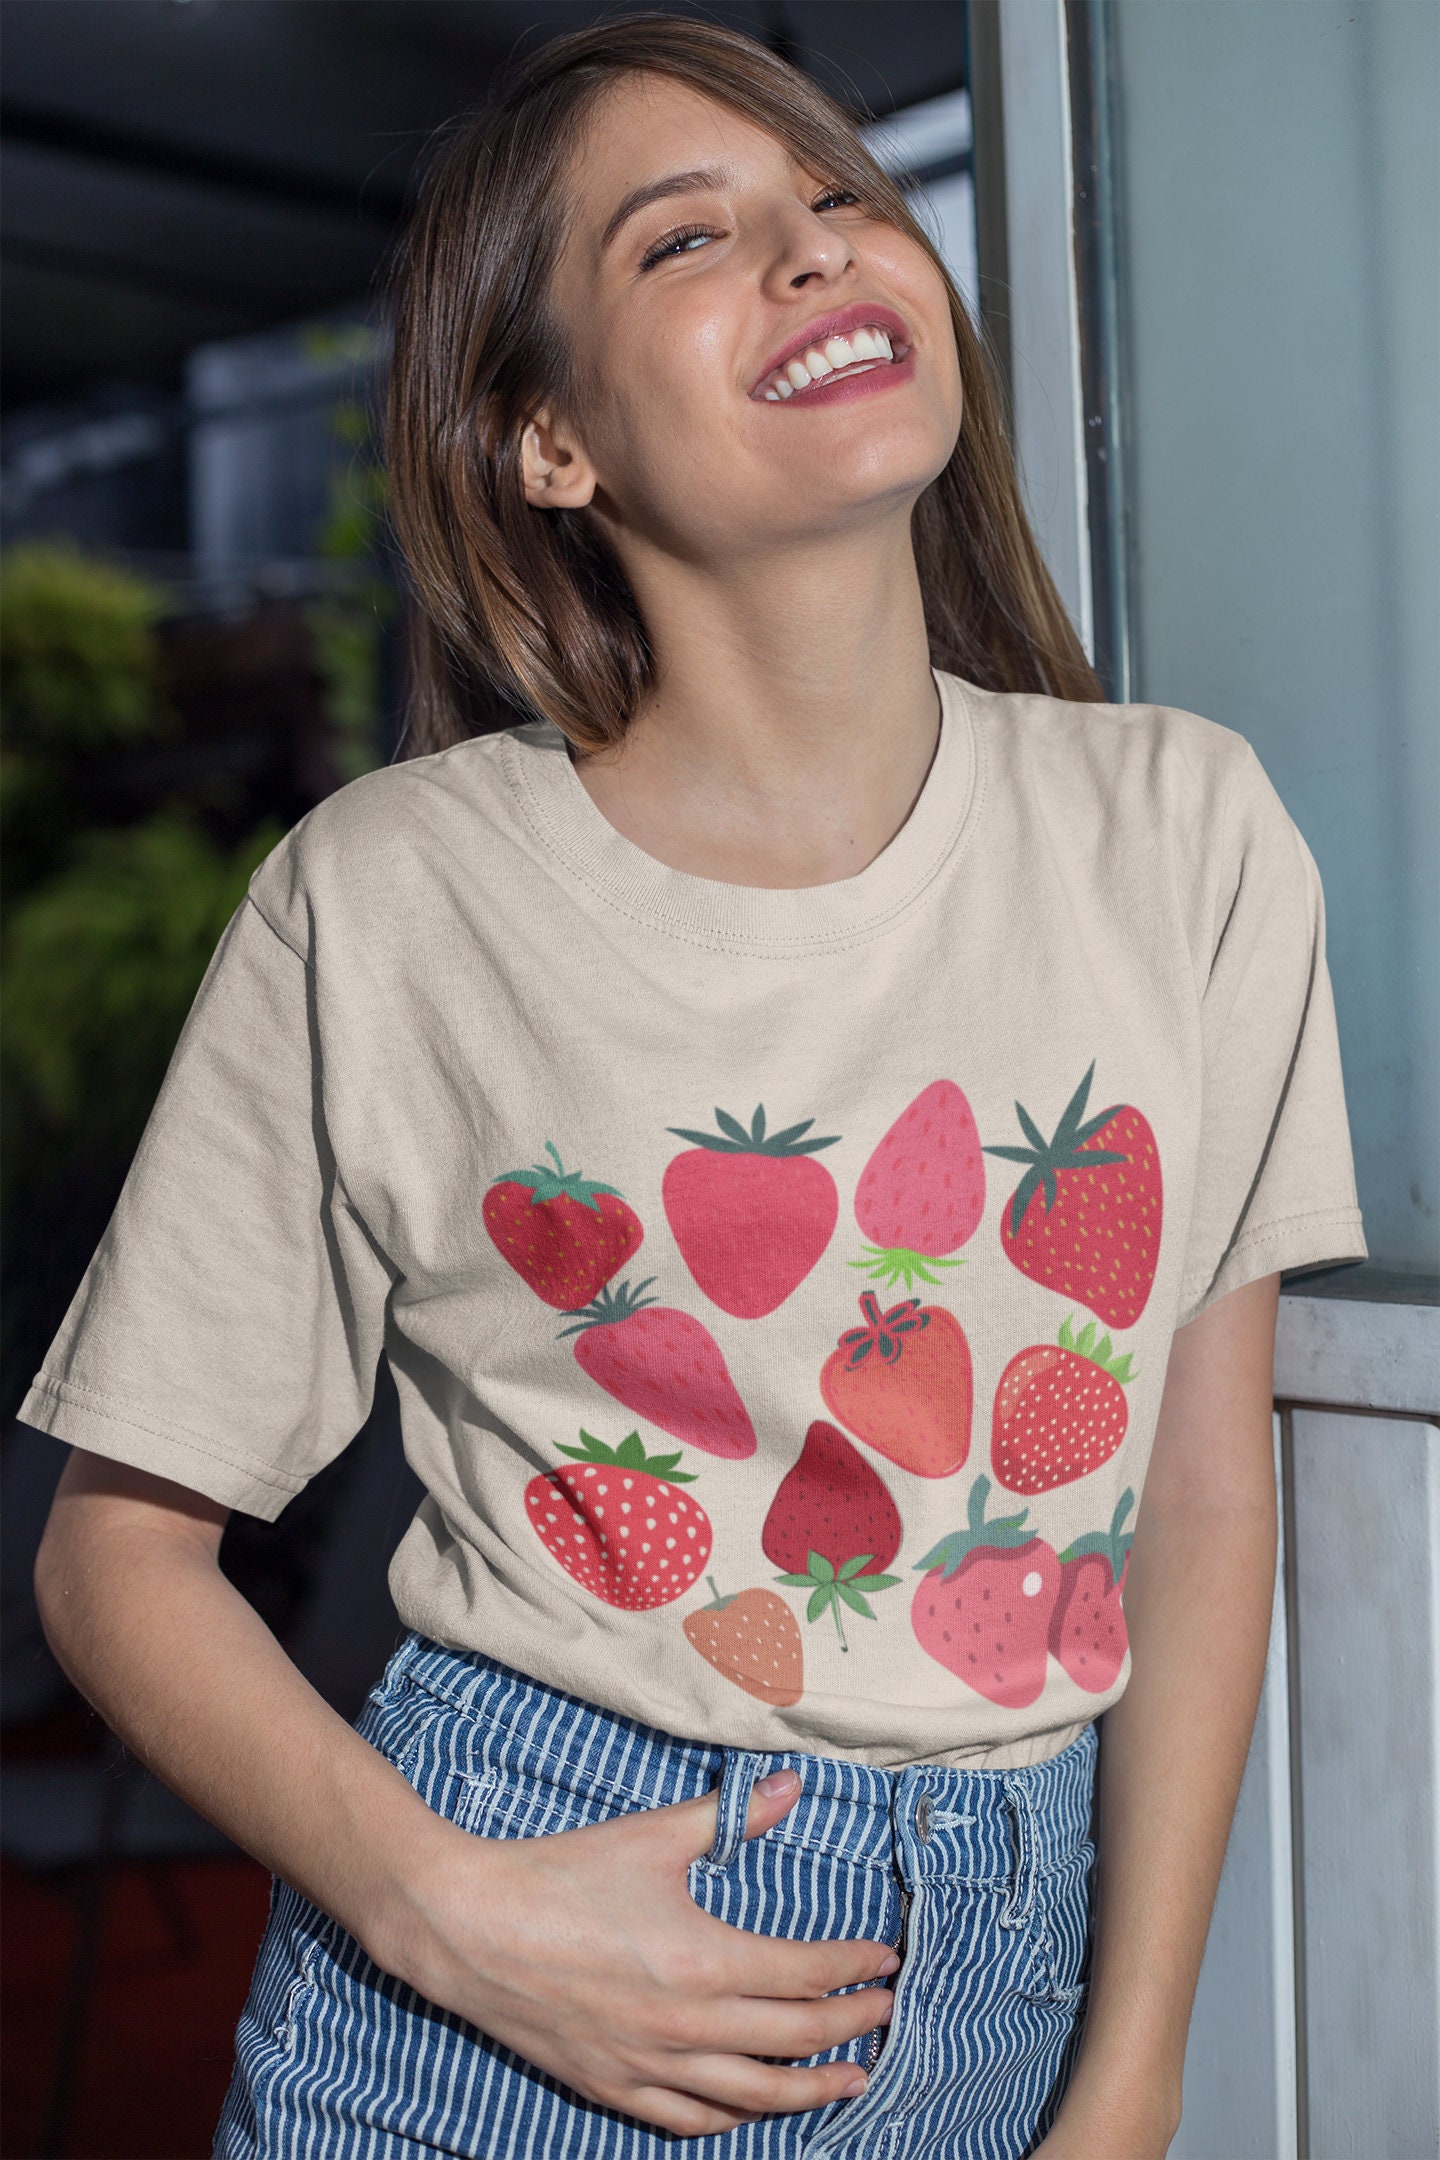 Strawberry shirt Cottage core Strawberry print Botanical shirt | Etsy